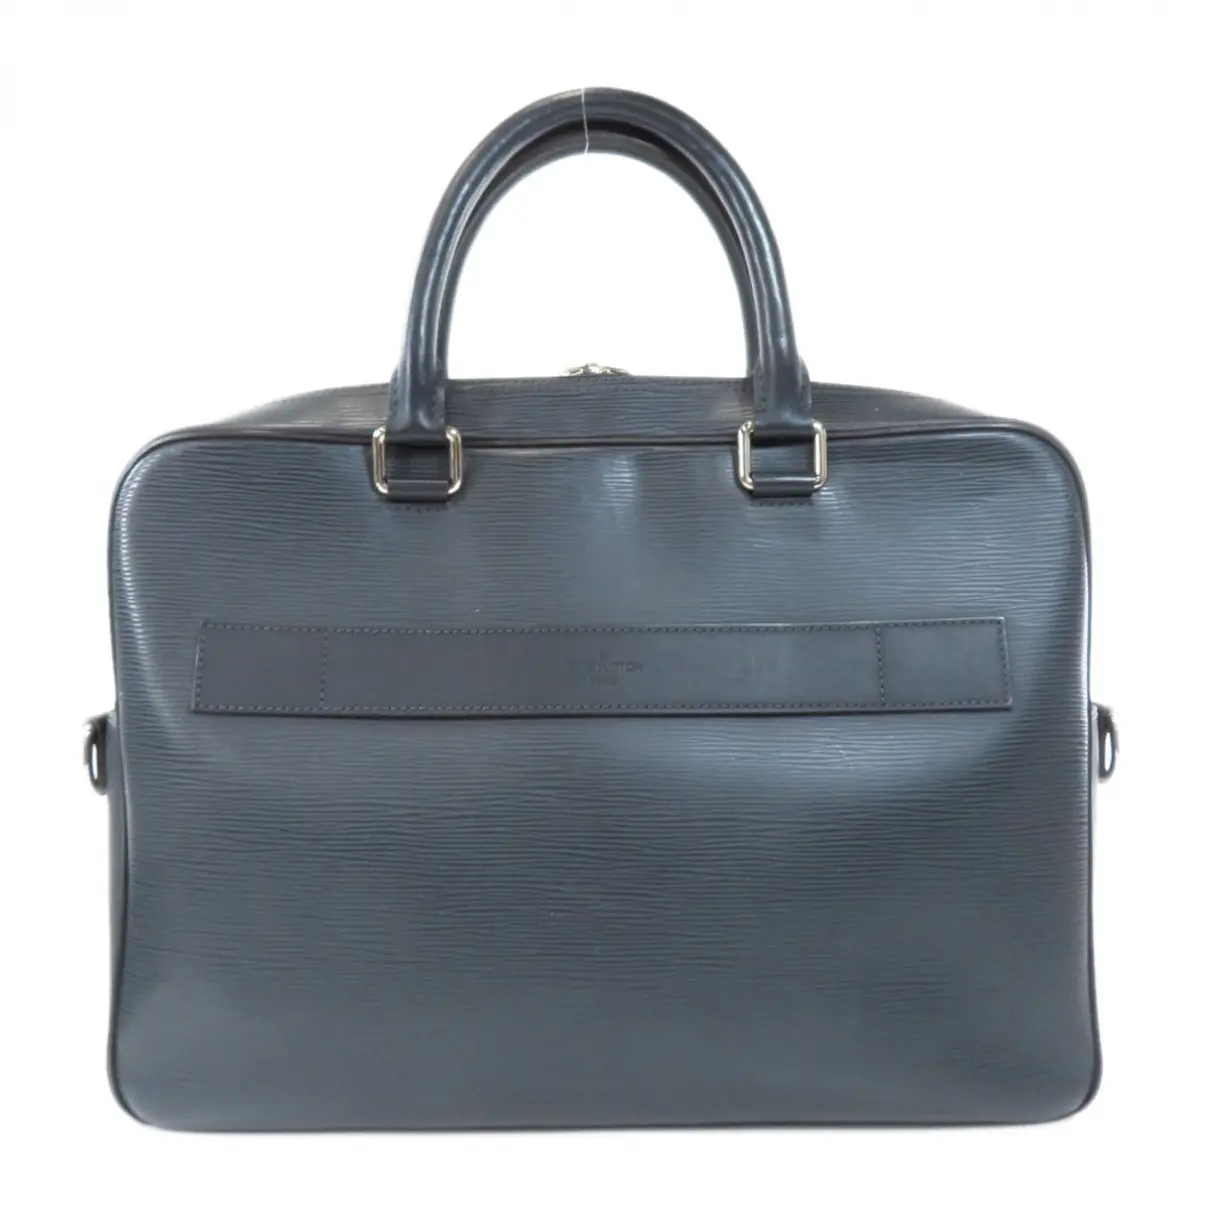 Buy Louis Vuitton Leather bag online